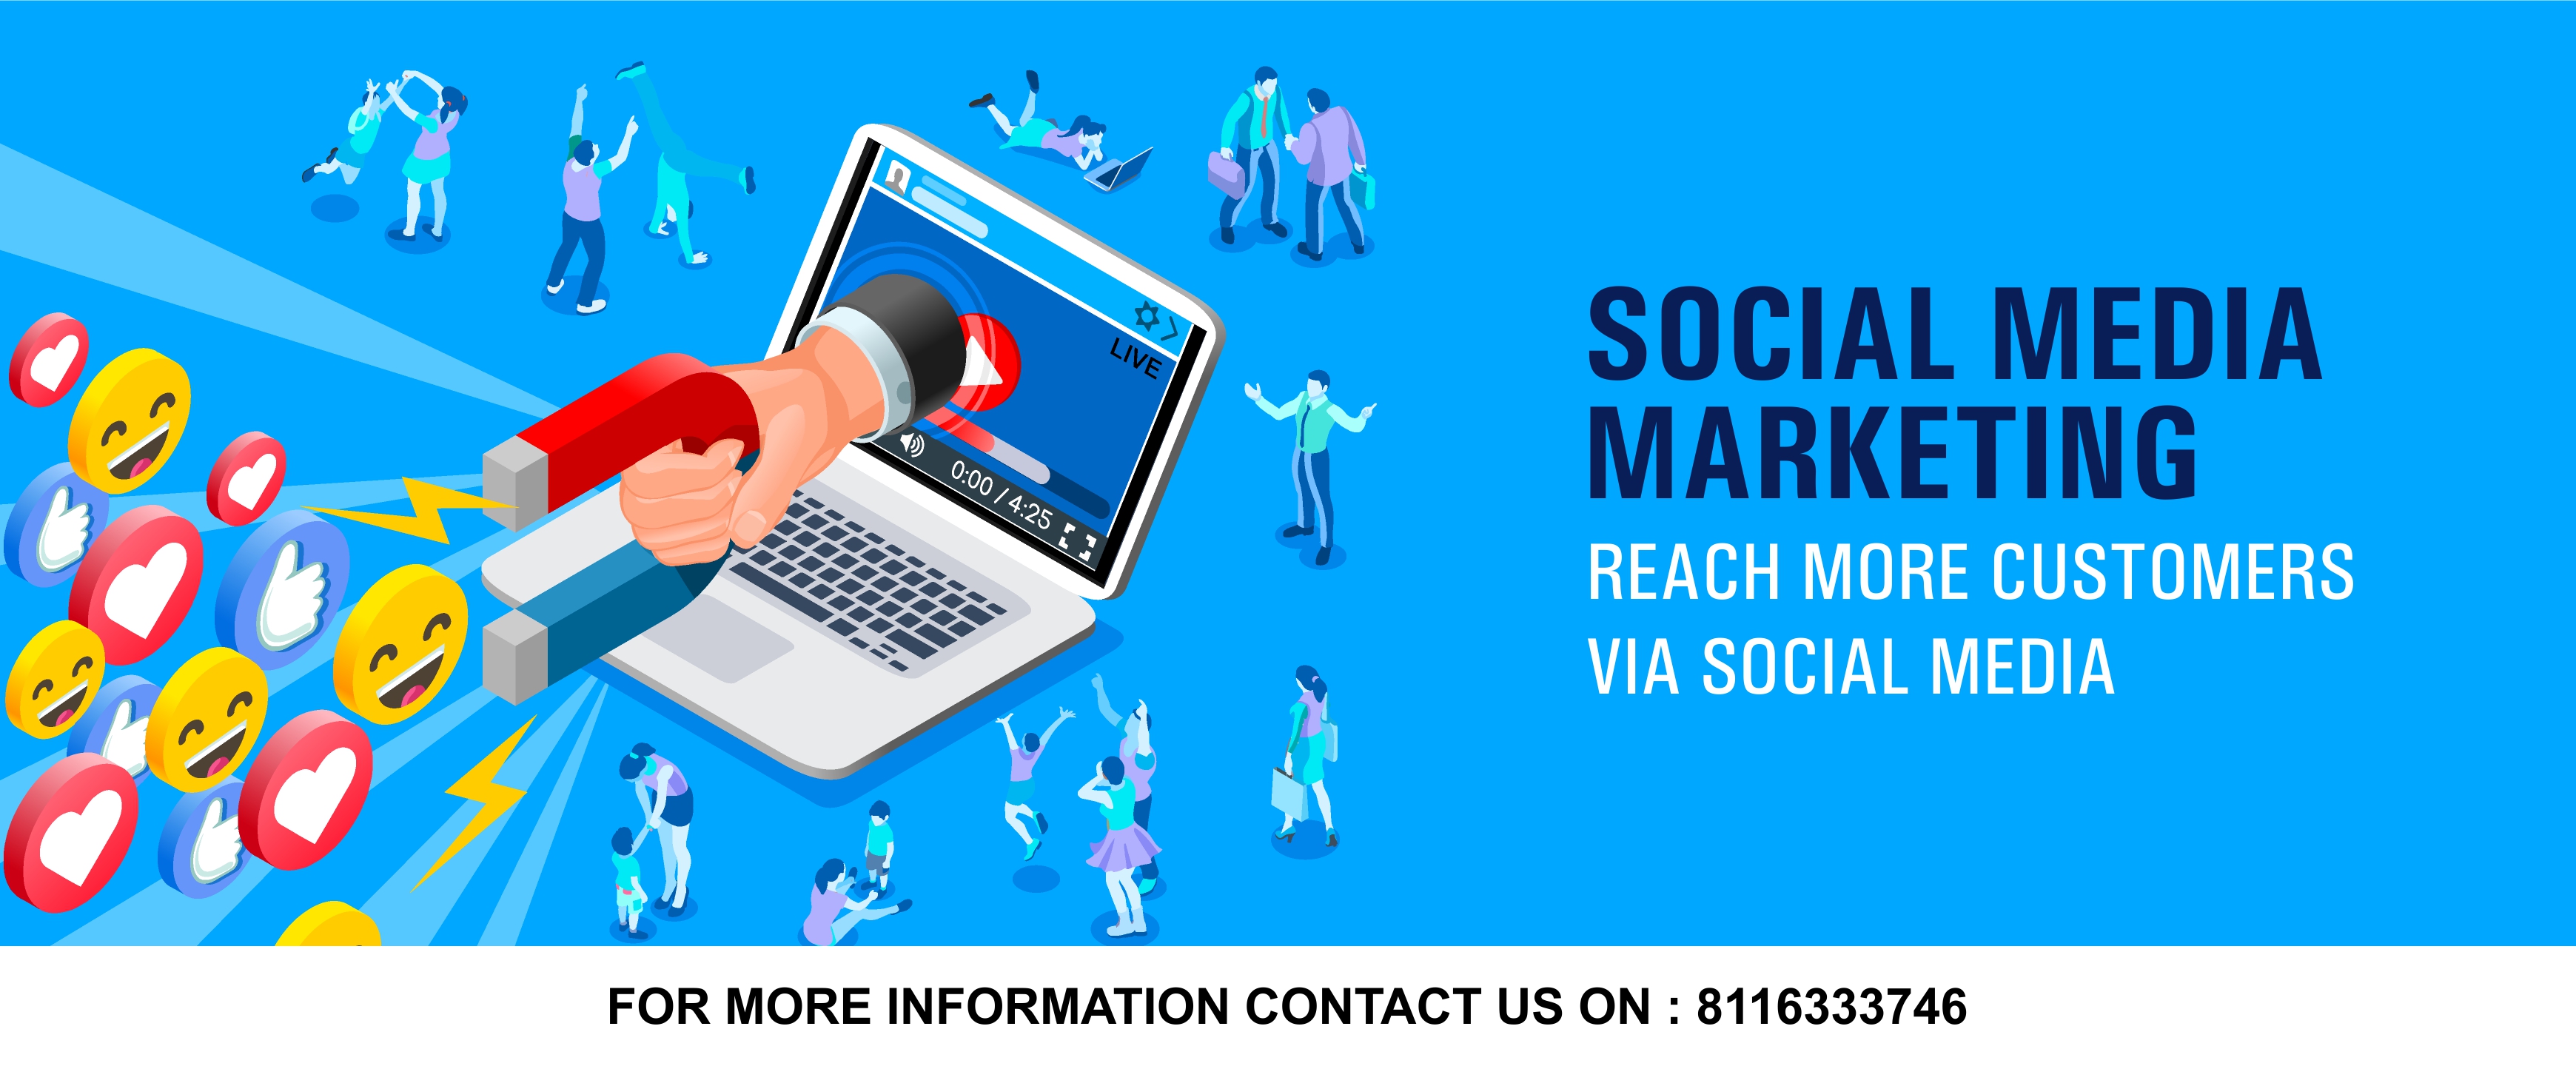 SMM SLIDER 2 - Social Media Marketing Service by Creative Studio